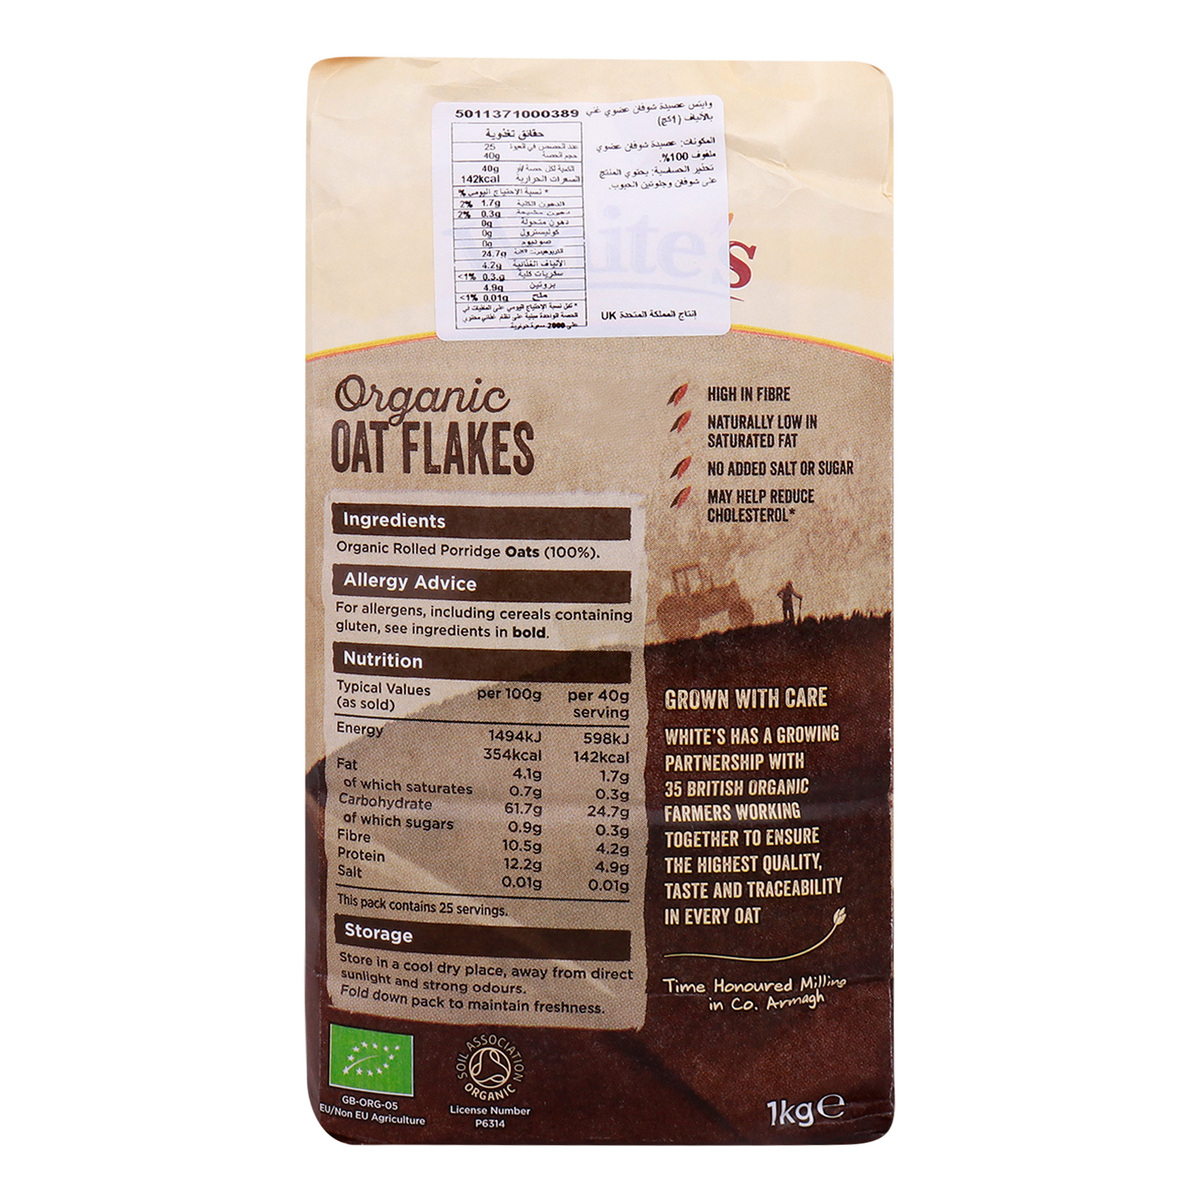 White's Organic Oat Flakes 1 kg